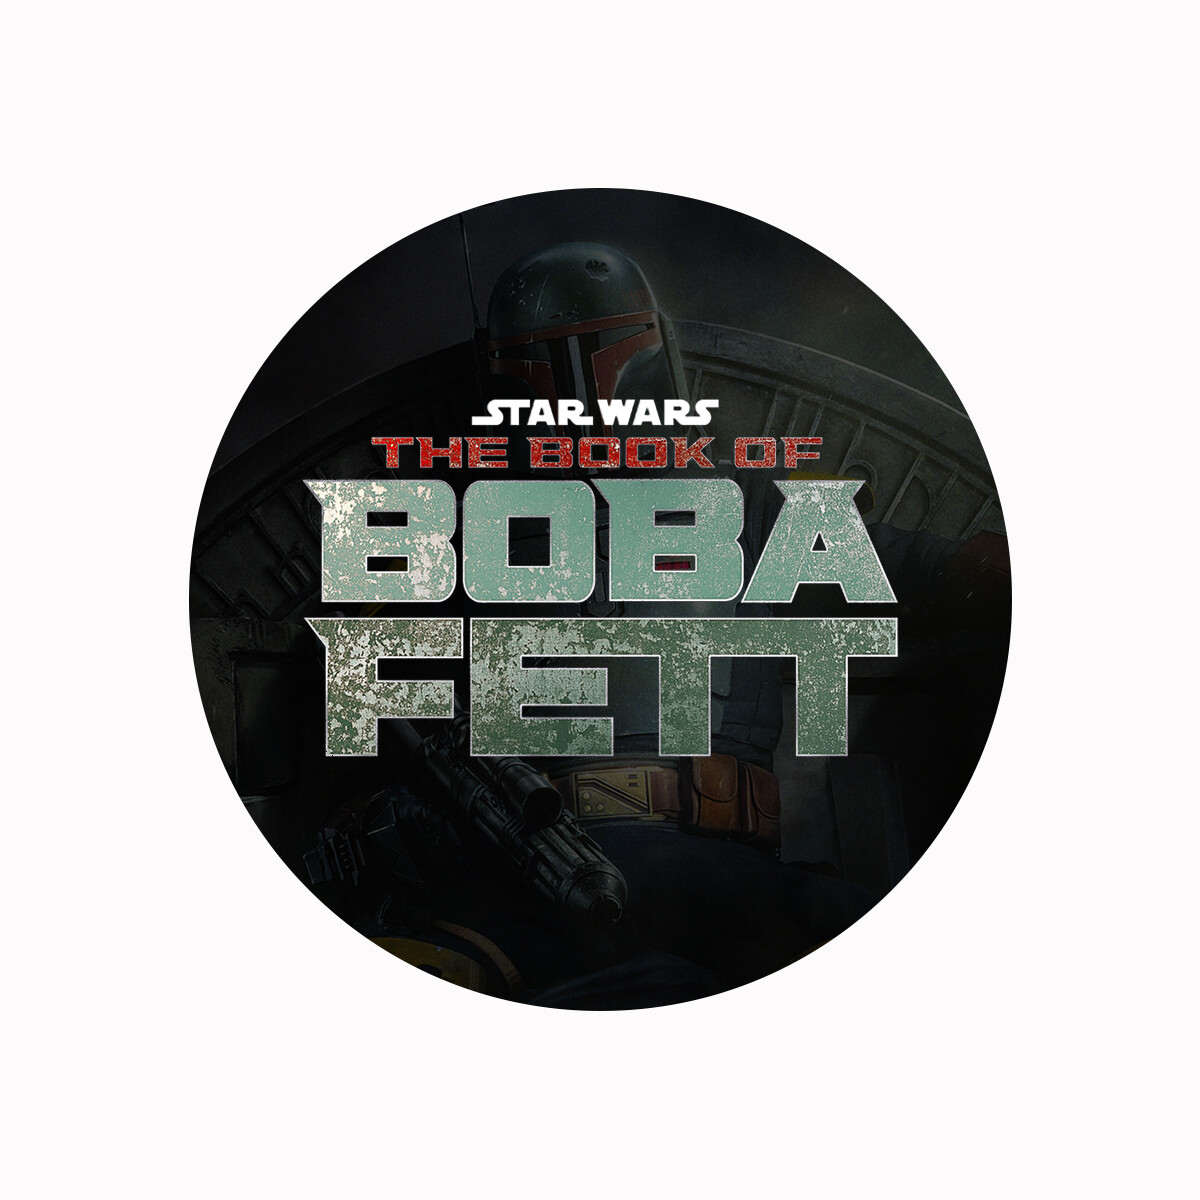 The Book of Boba Fett credits!